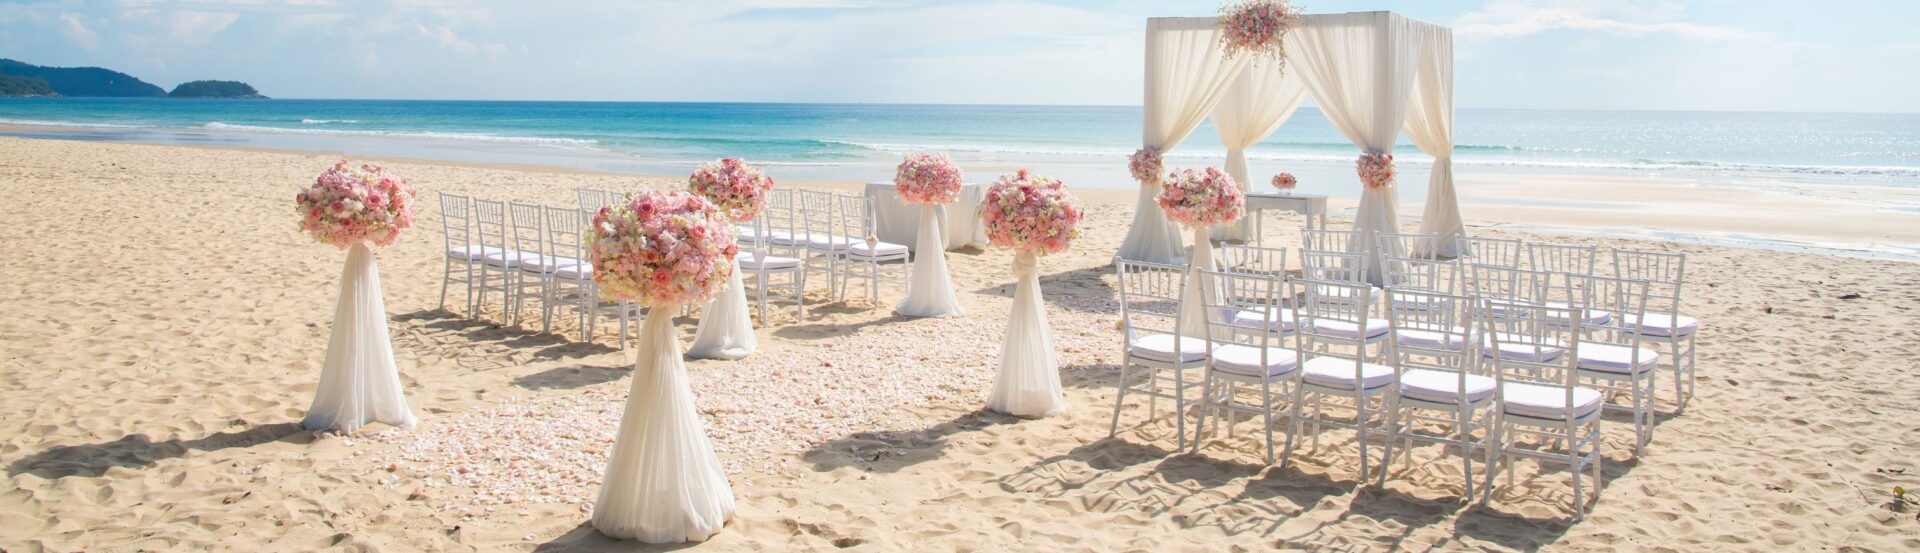 Beachfront Weddings in Ras Al Khaimah